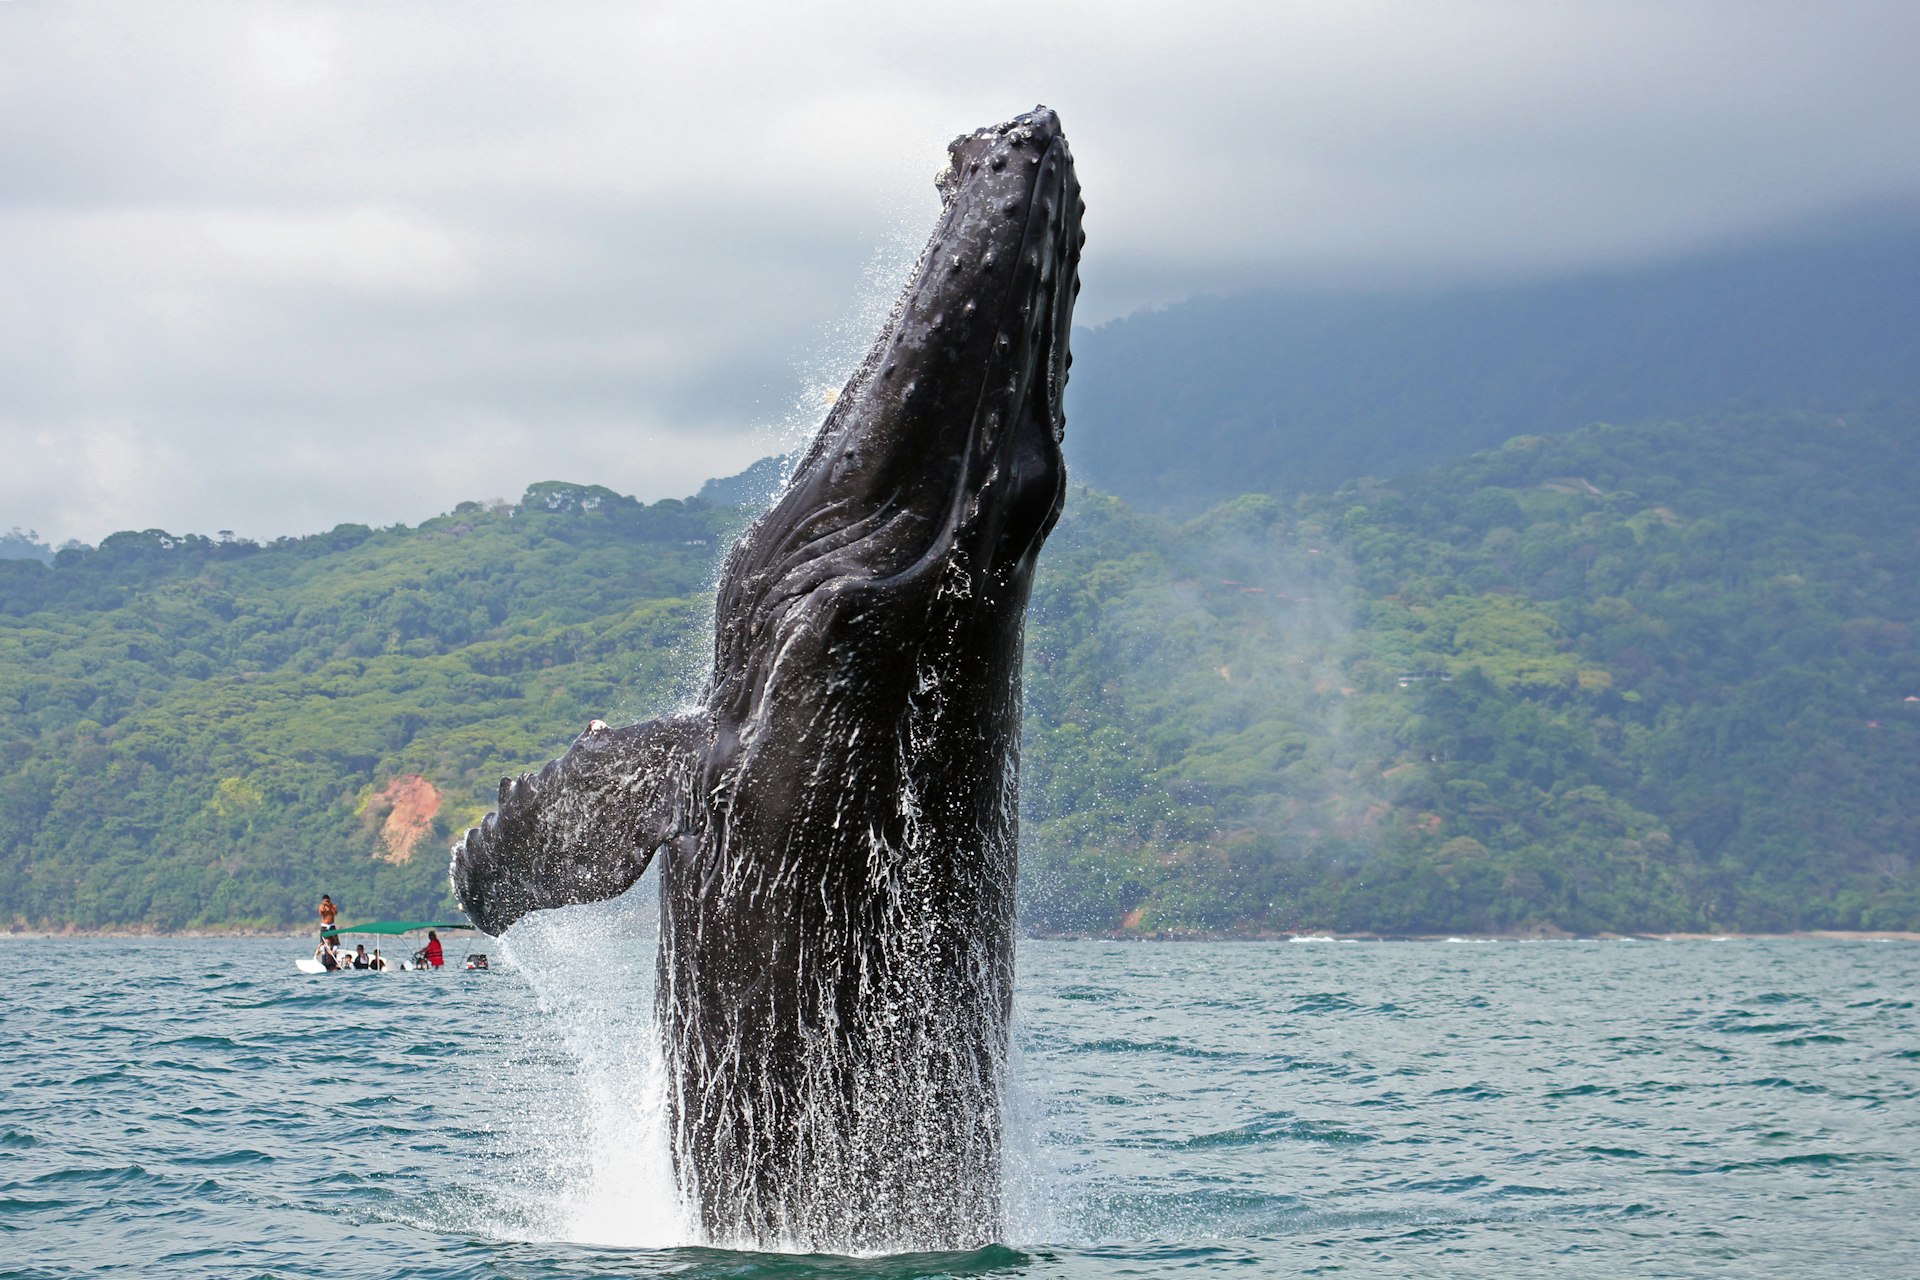 Humpback whale breaching off the coast of an island